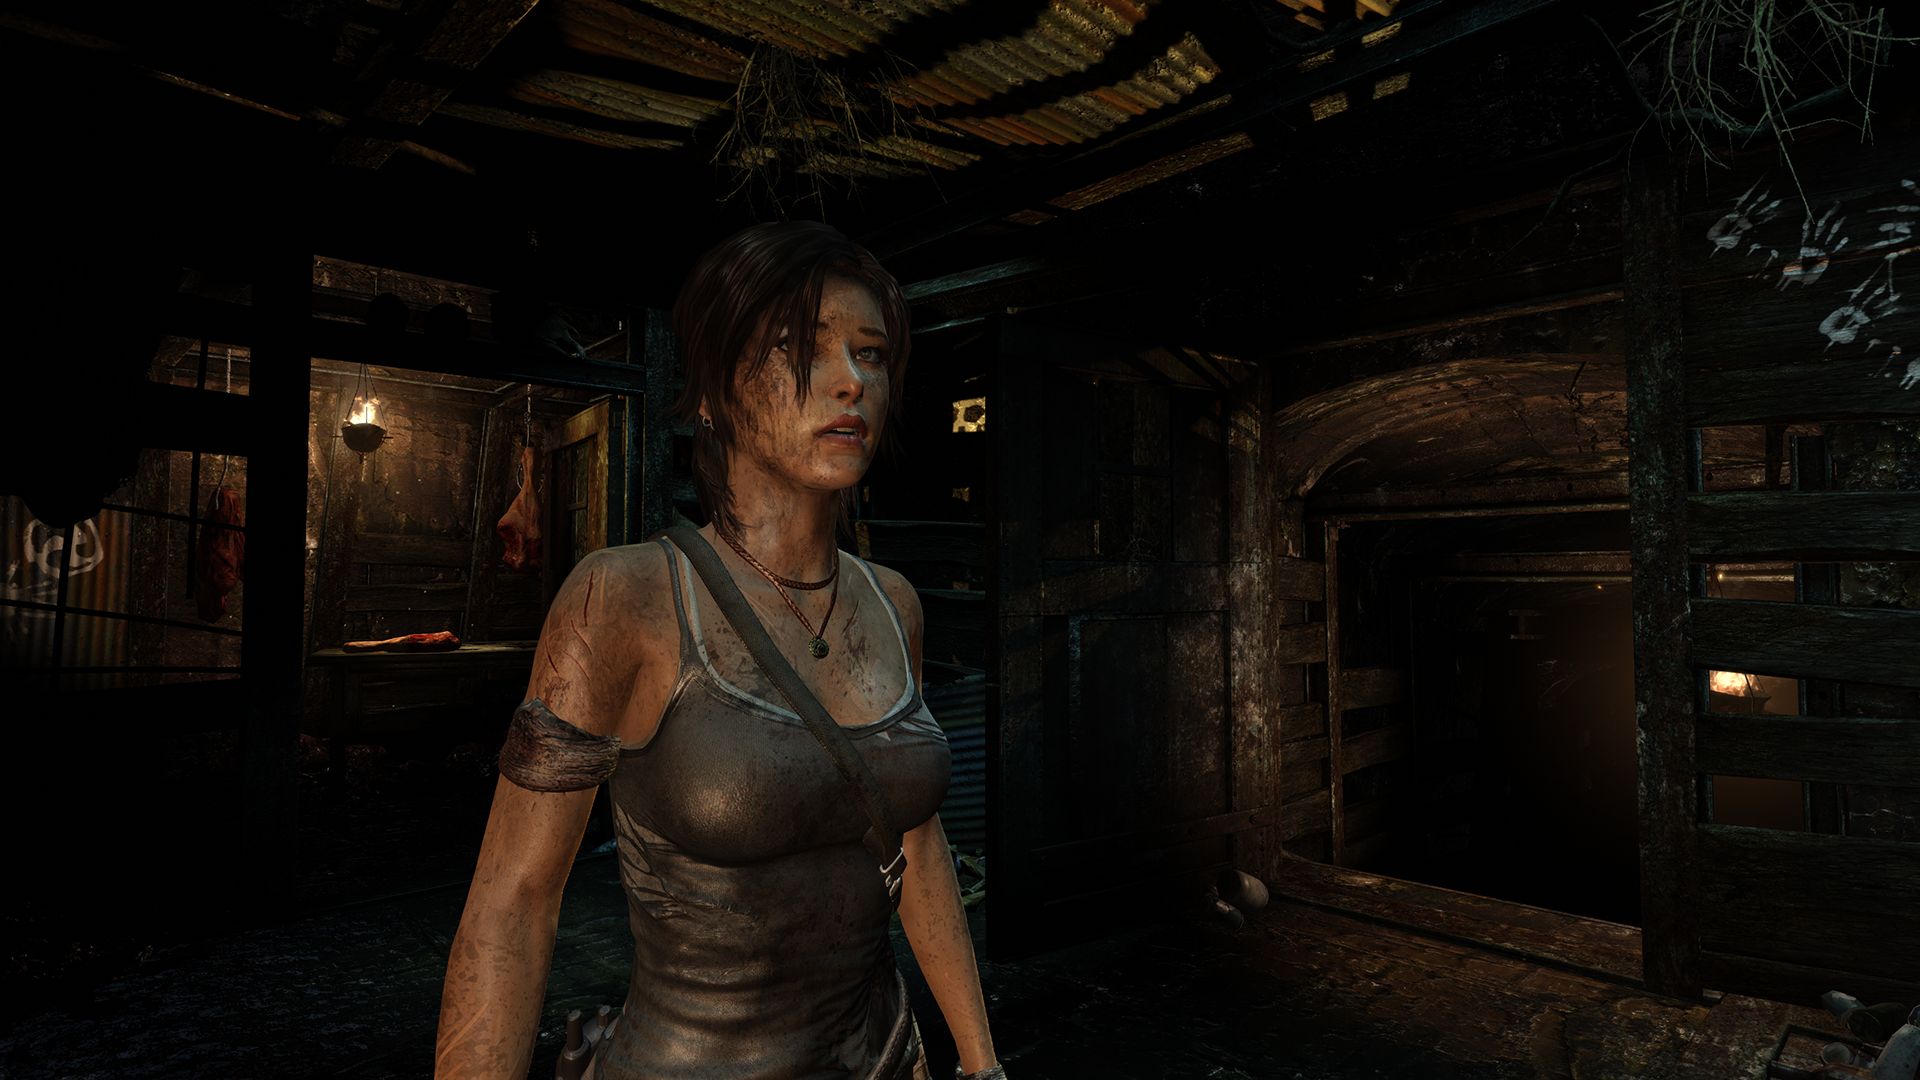 Descarga gratuita de fondo de pantalla para móvil de Tomb Raider, Videojuego.